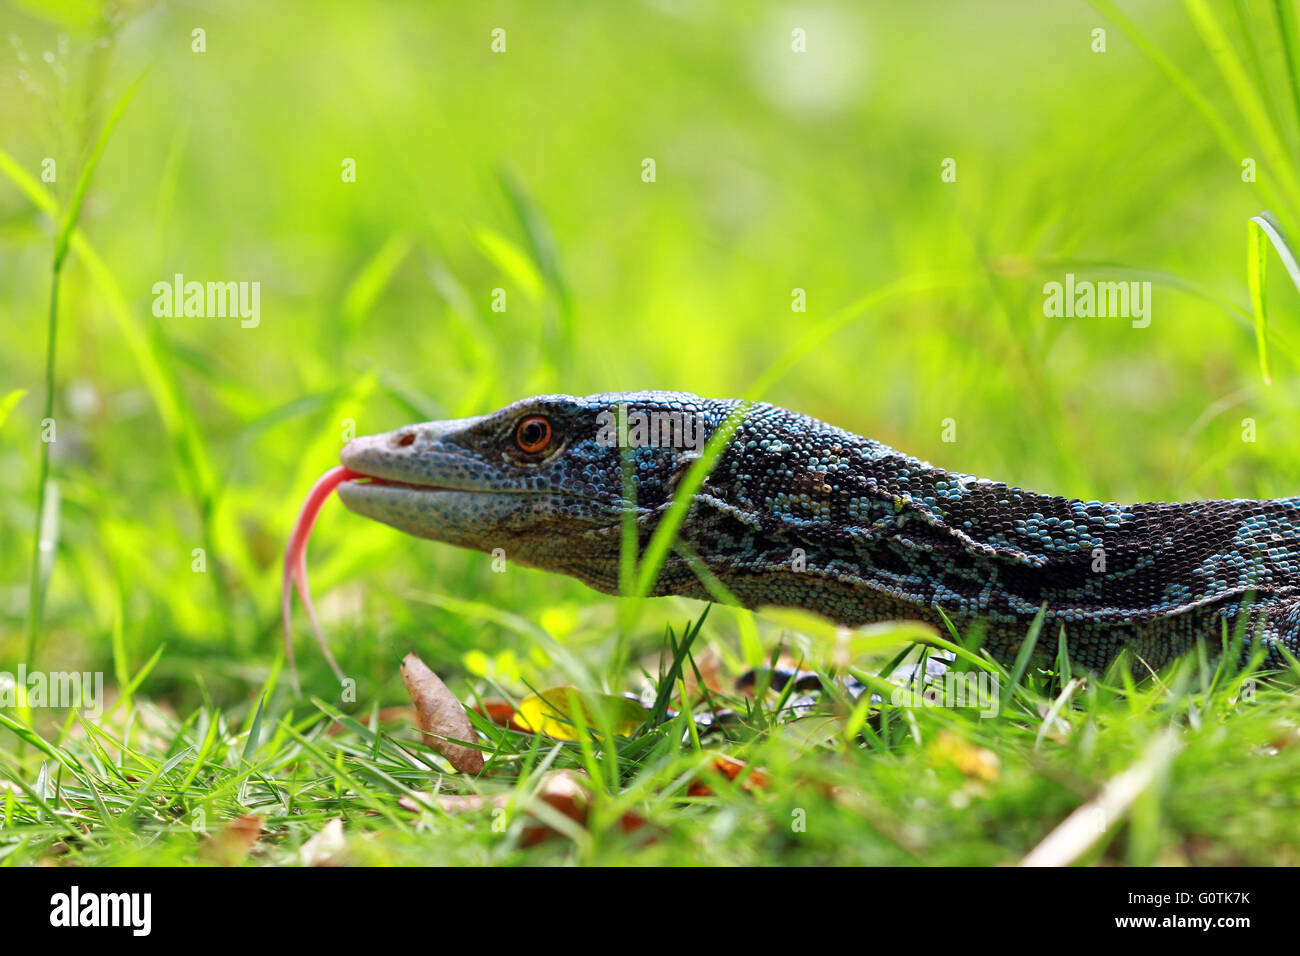 Blue spotted monitor lizard (varanus macraei), Indonesia Stock Photo